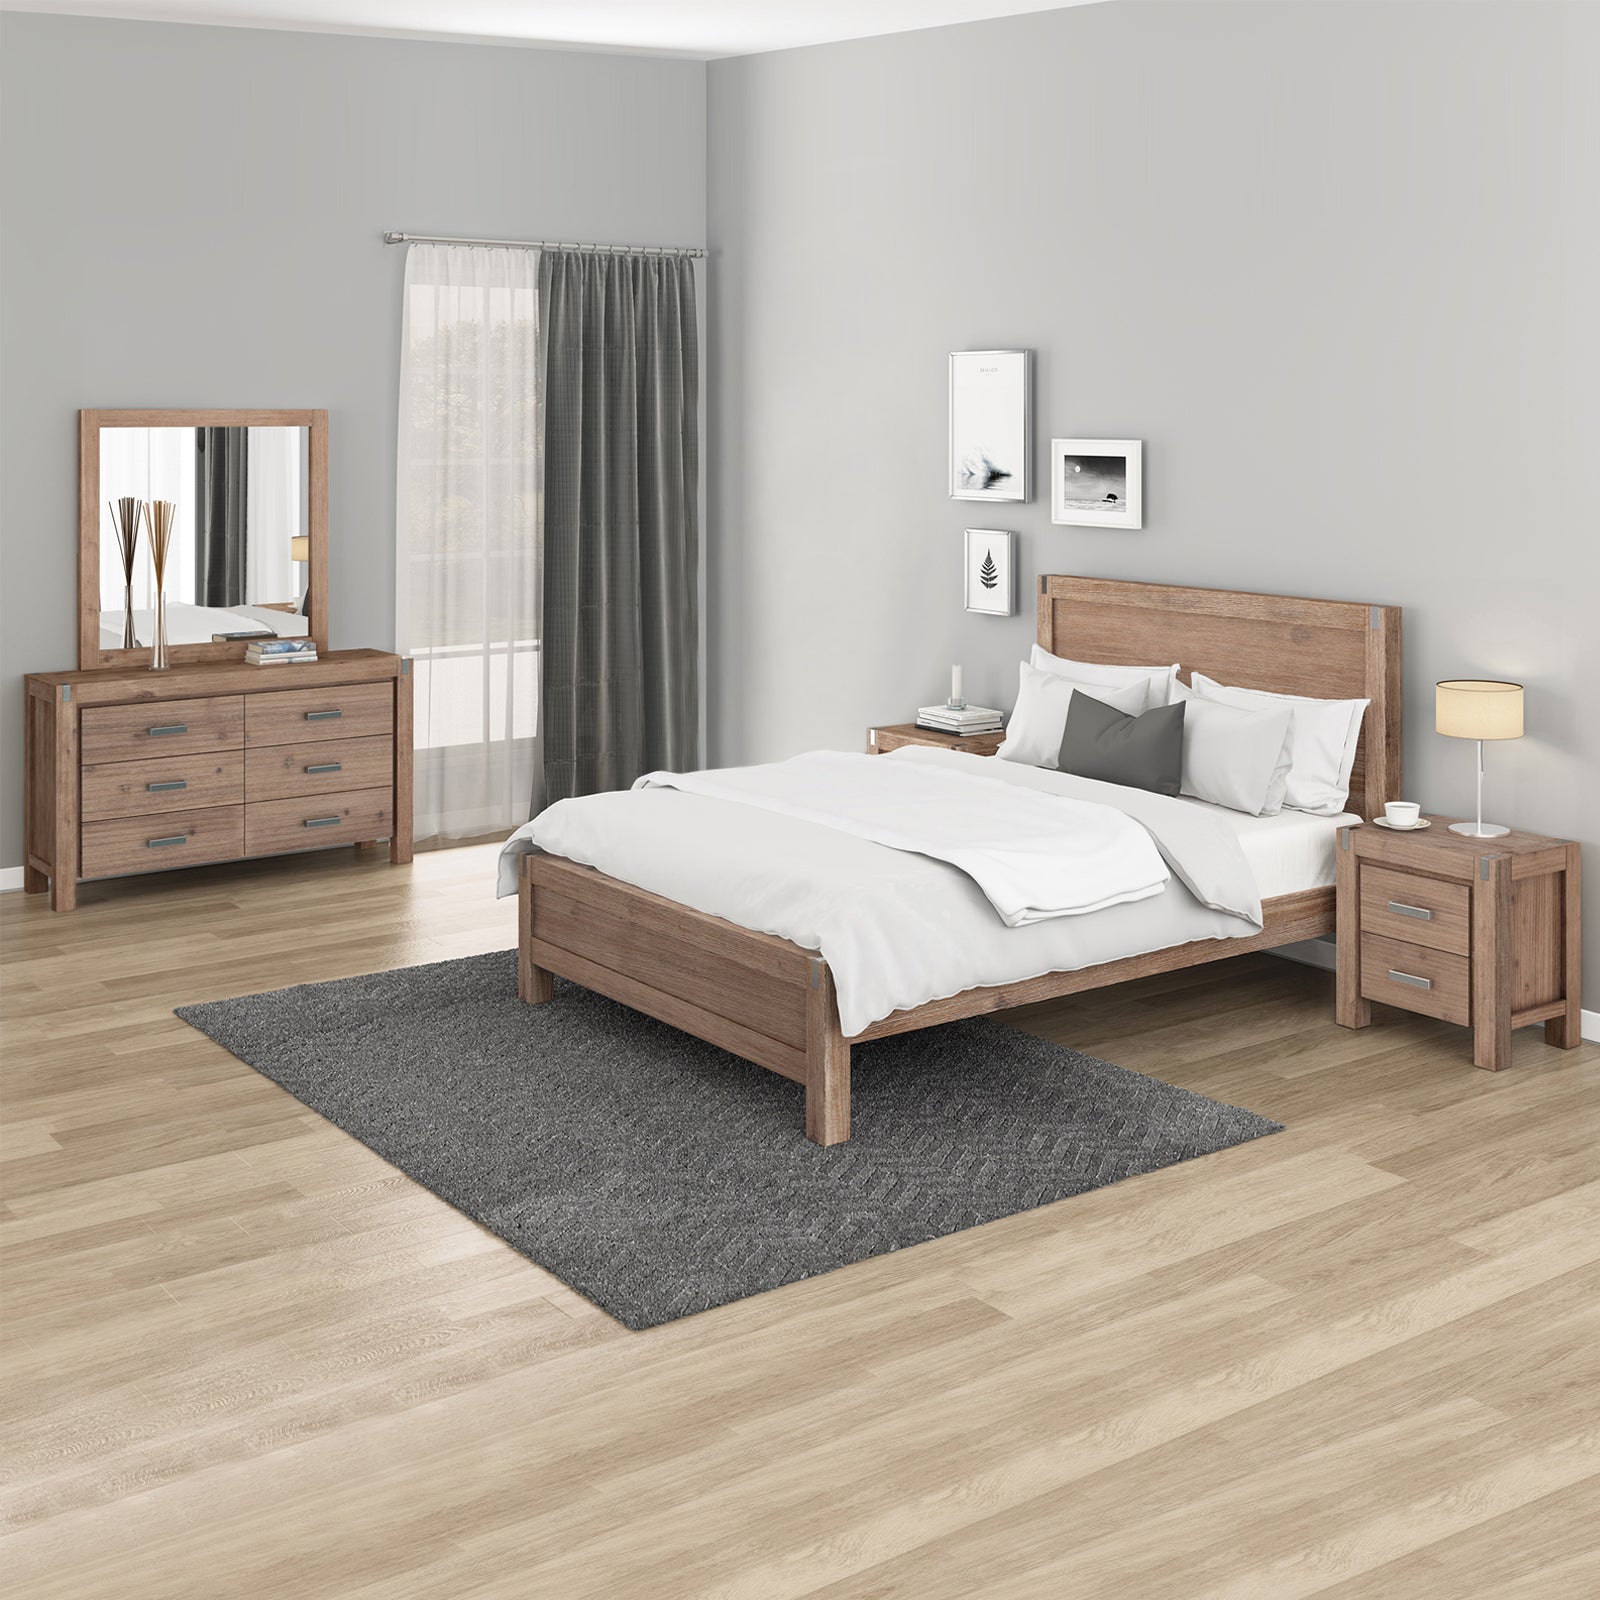 Noor 4 Pieces Double Size Bedroom Suite Oak Colour with Dresser